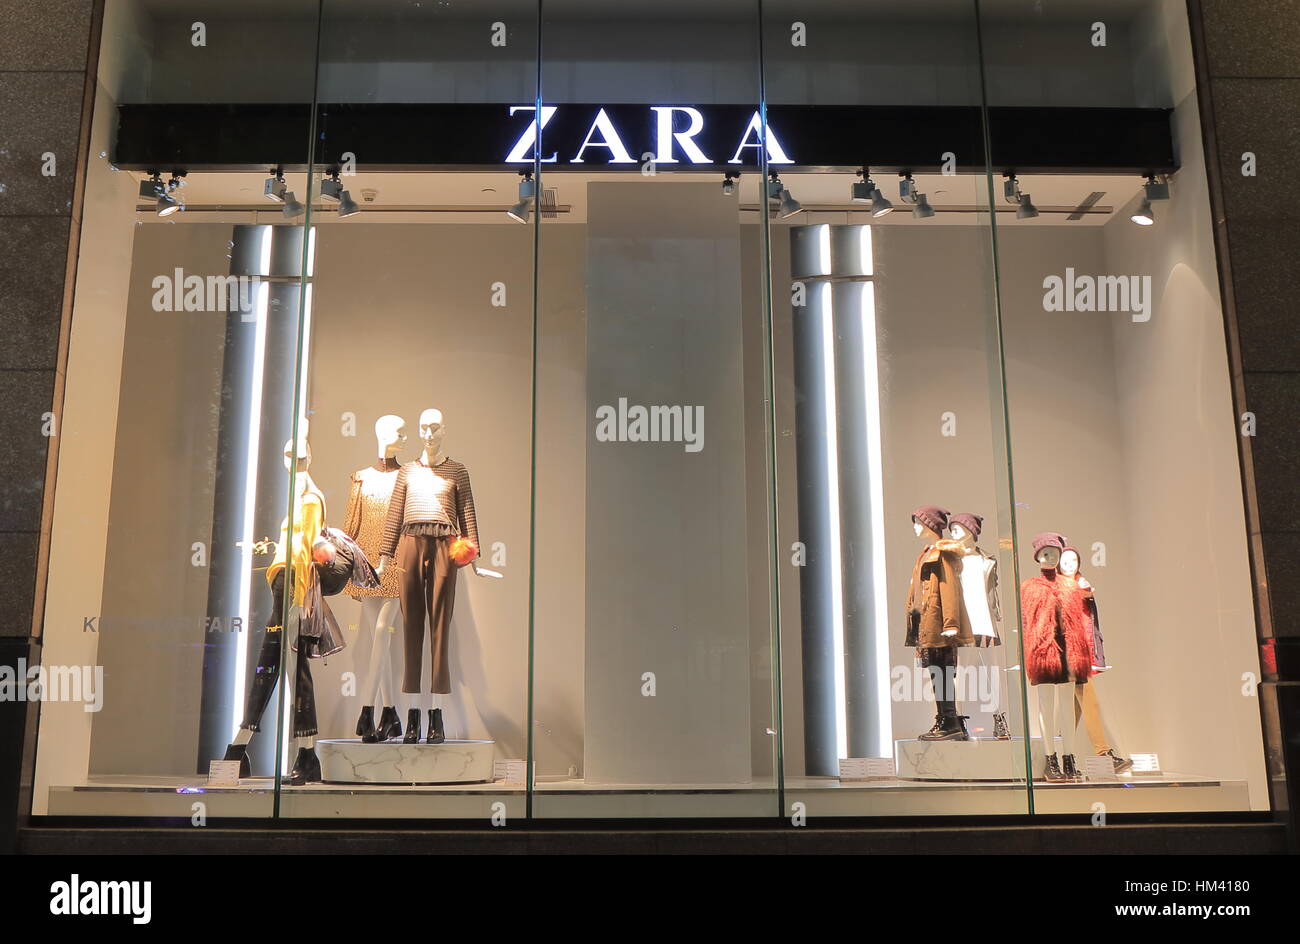 ZARA shop in Shanghai China. ZARA is a 